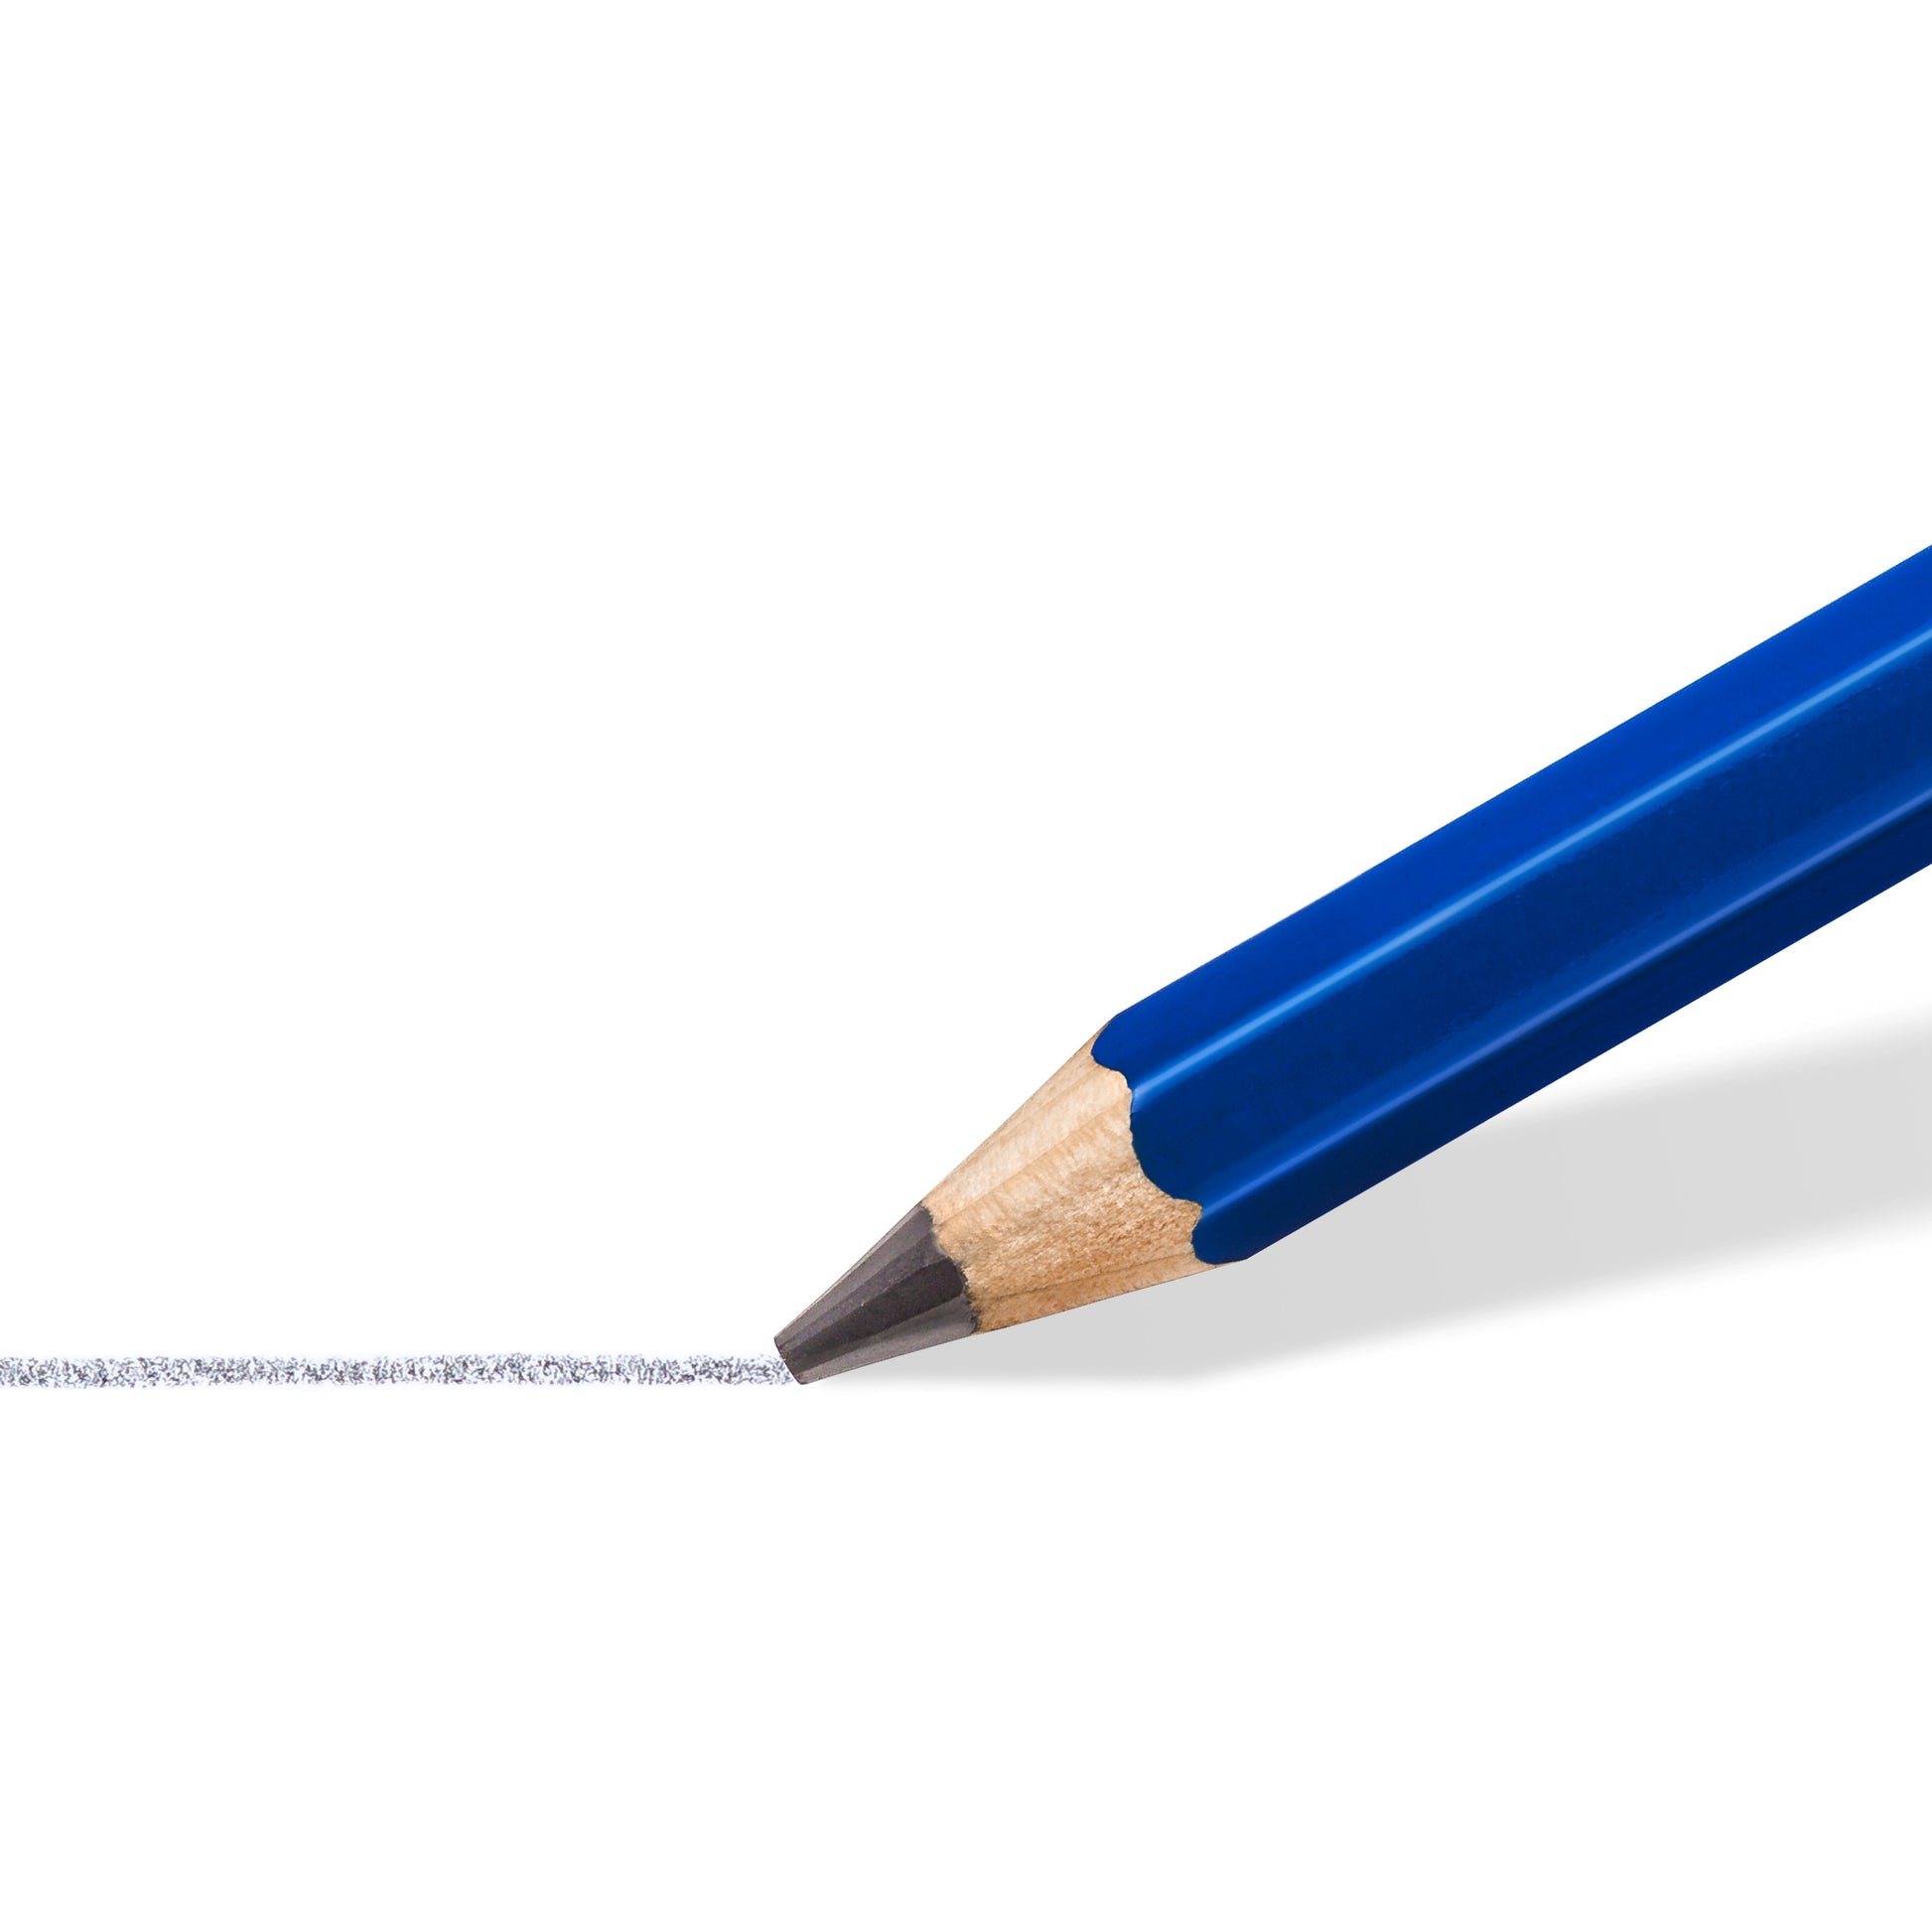 Staedtler Mars® Lumograph® Aquarell 100A-4B Premium Watercolour Graphite Pencil 4B